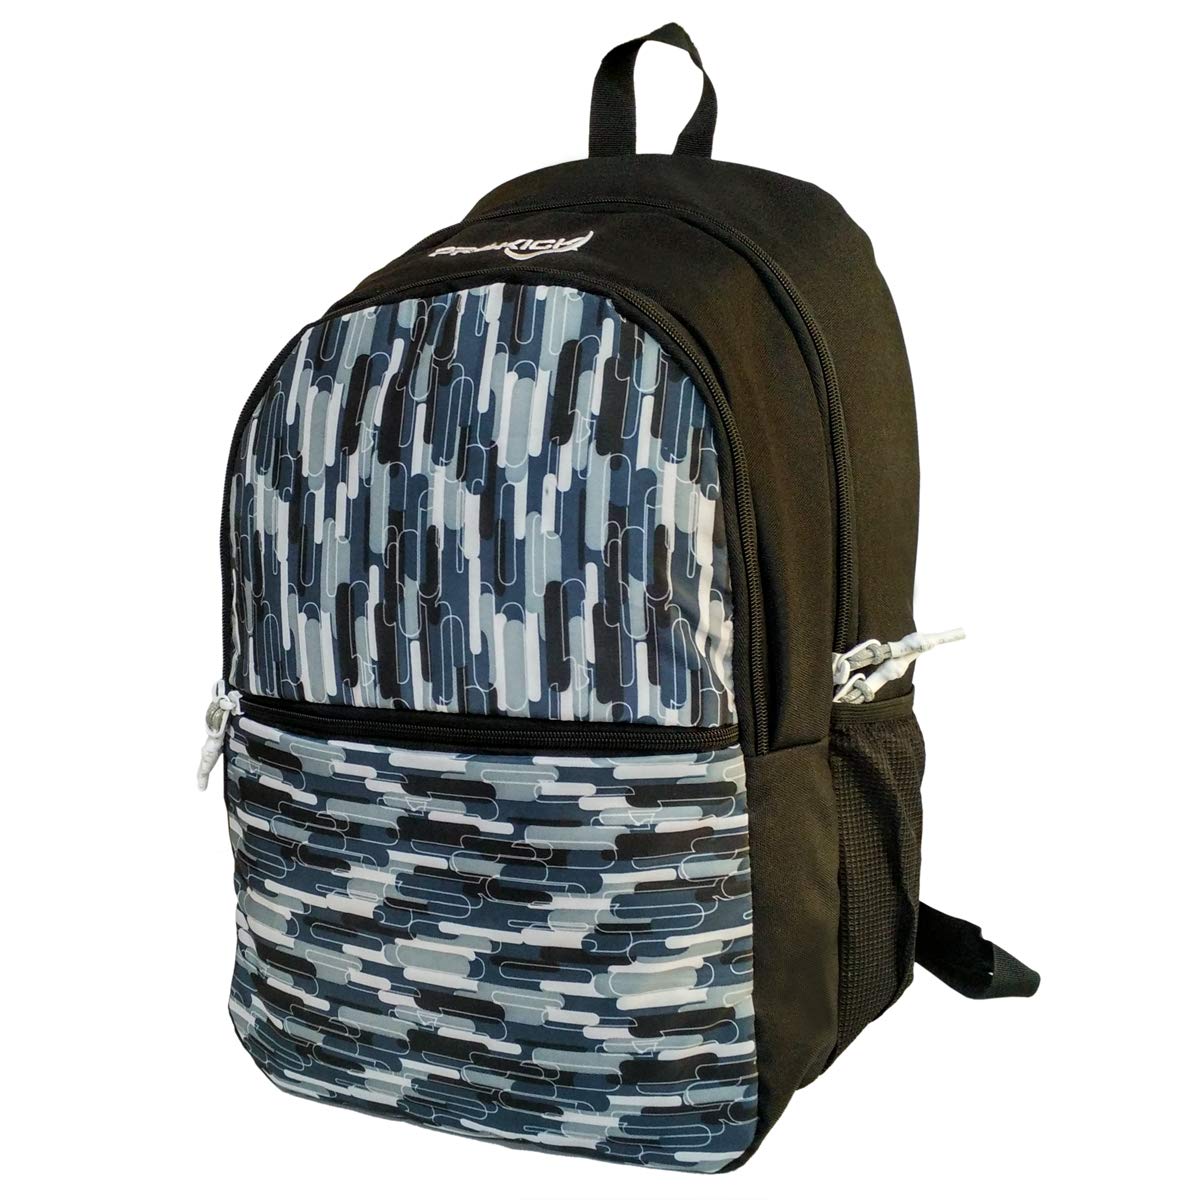 Prokick 30L Waterproof Casual Backpack |  School Bag - Escalate - Best Price online Prokicksports.com